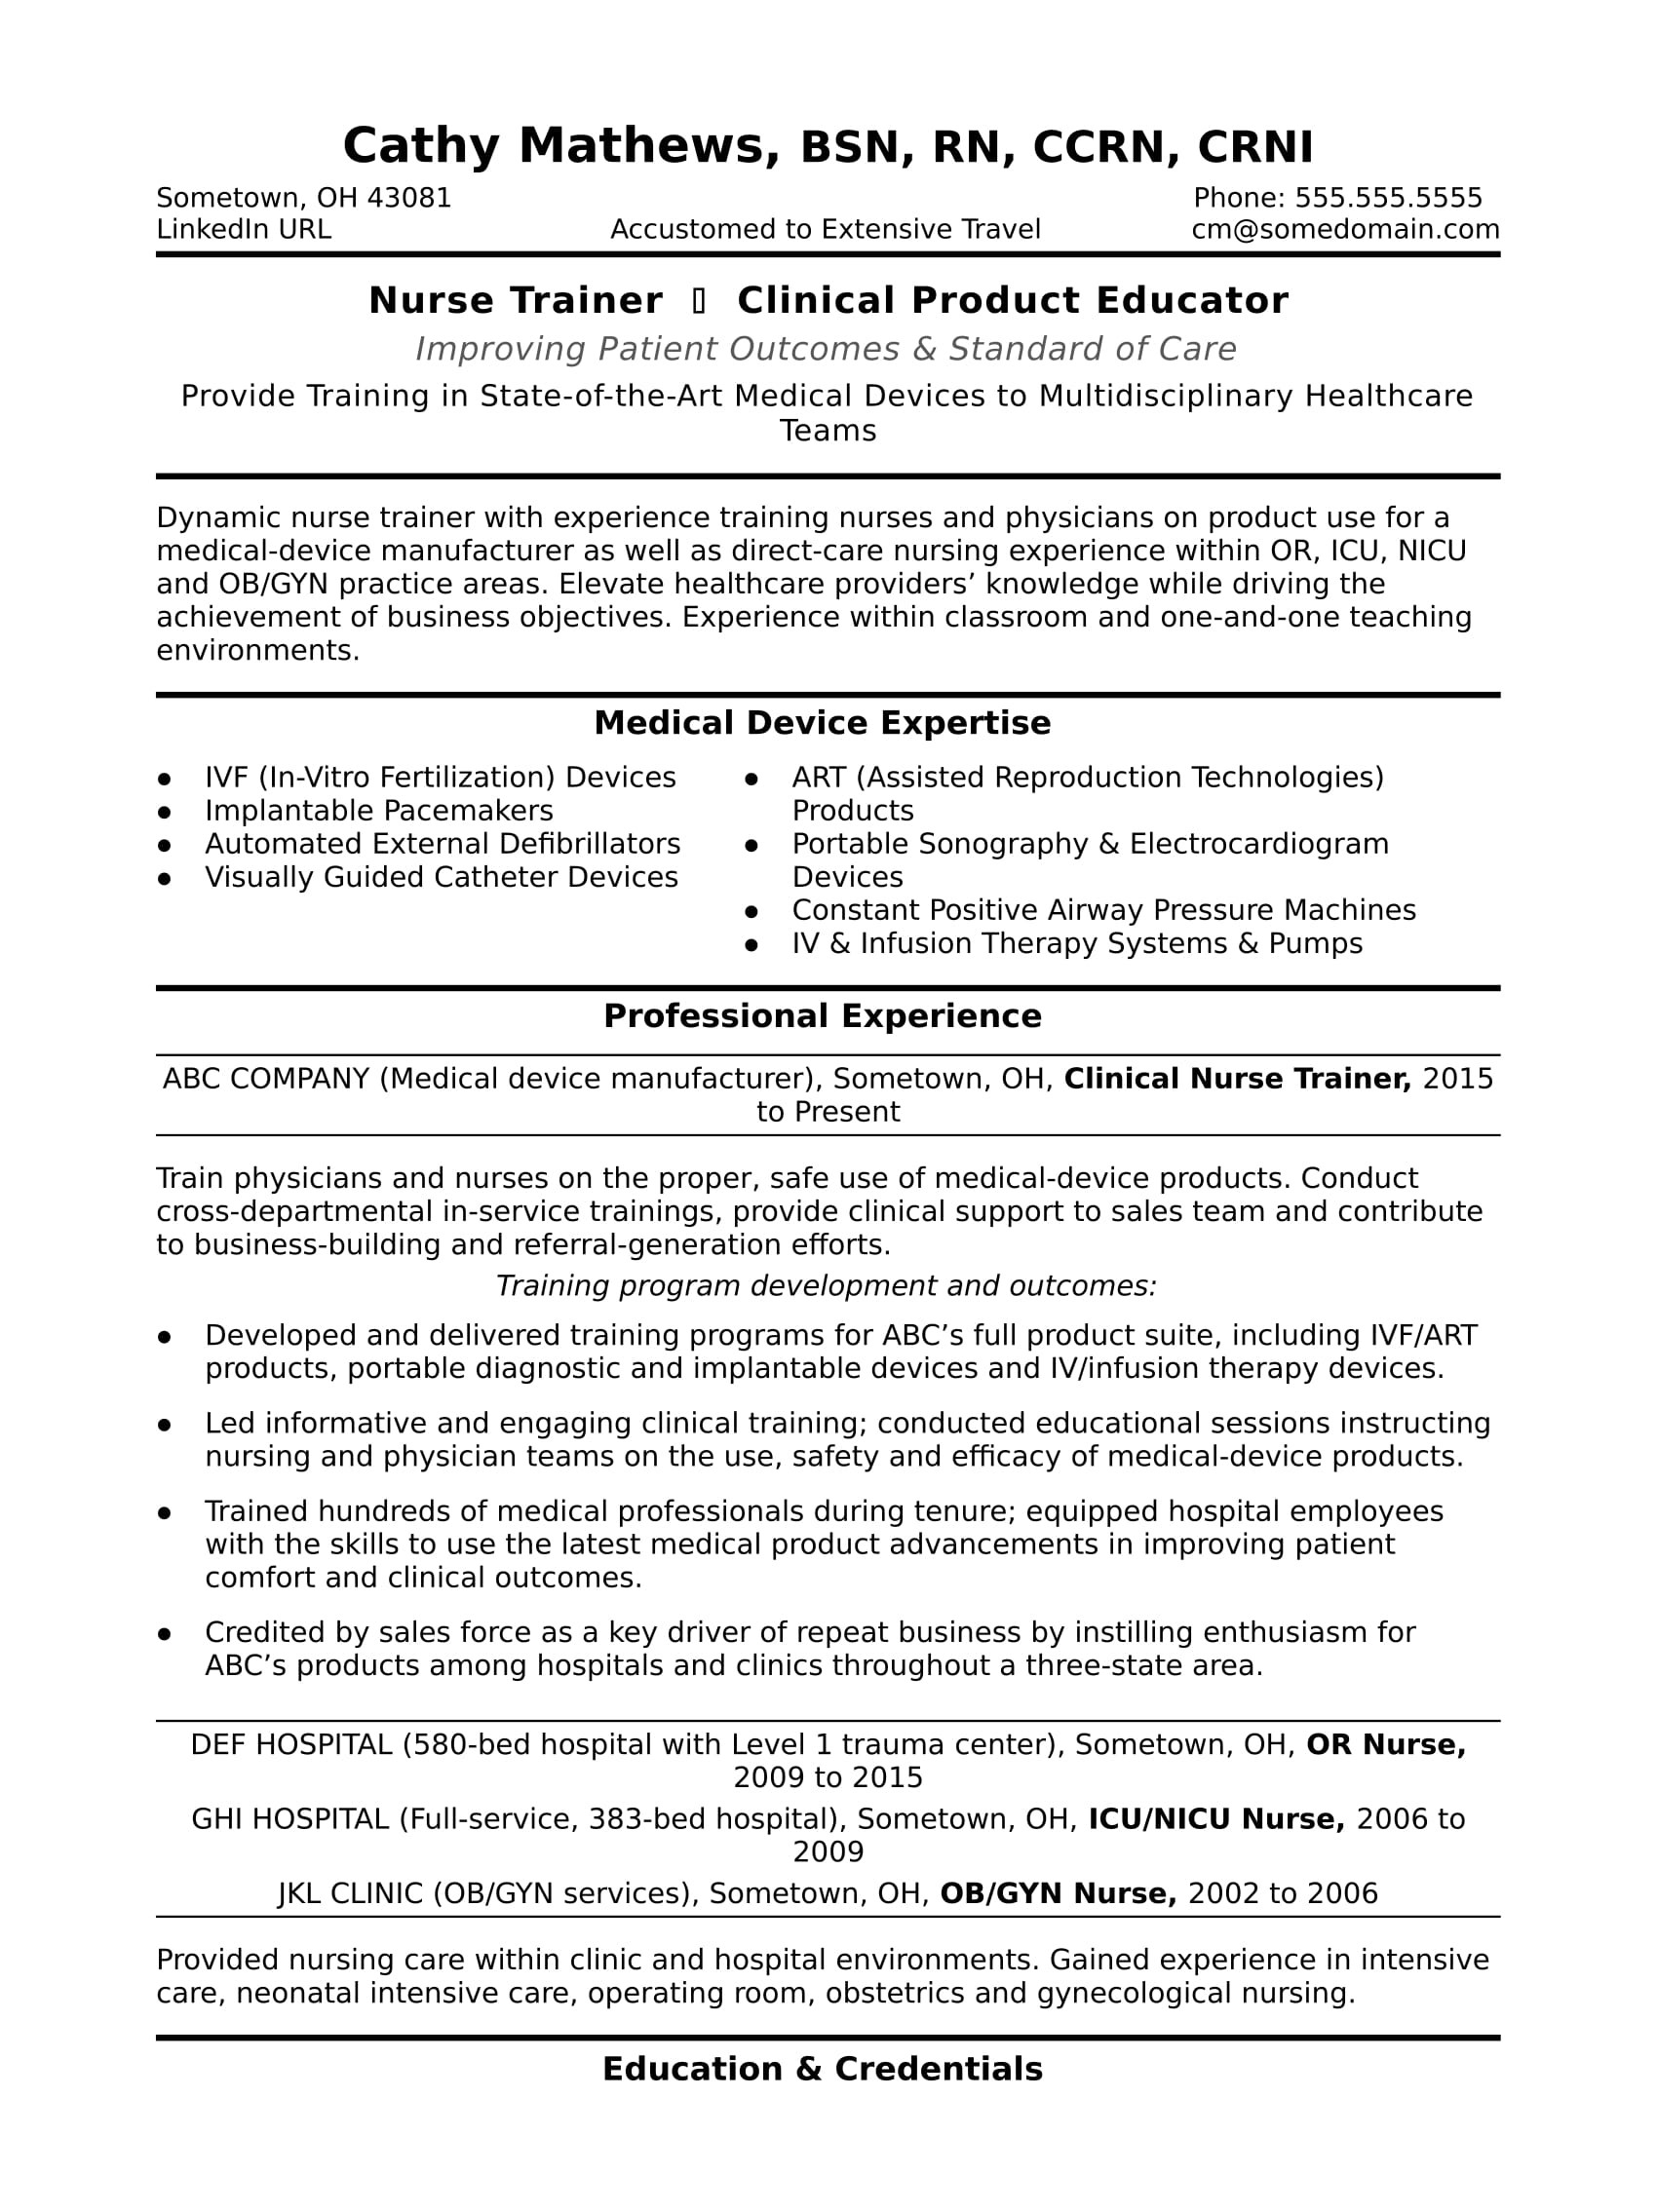 Sample Resume Of Critical Care Educator Nurse Trainer Resume Sample Monster.com